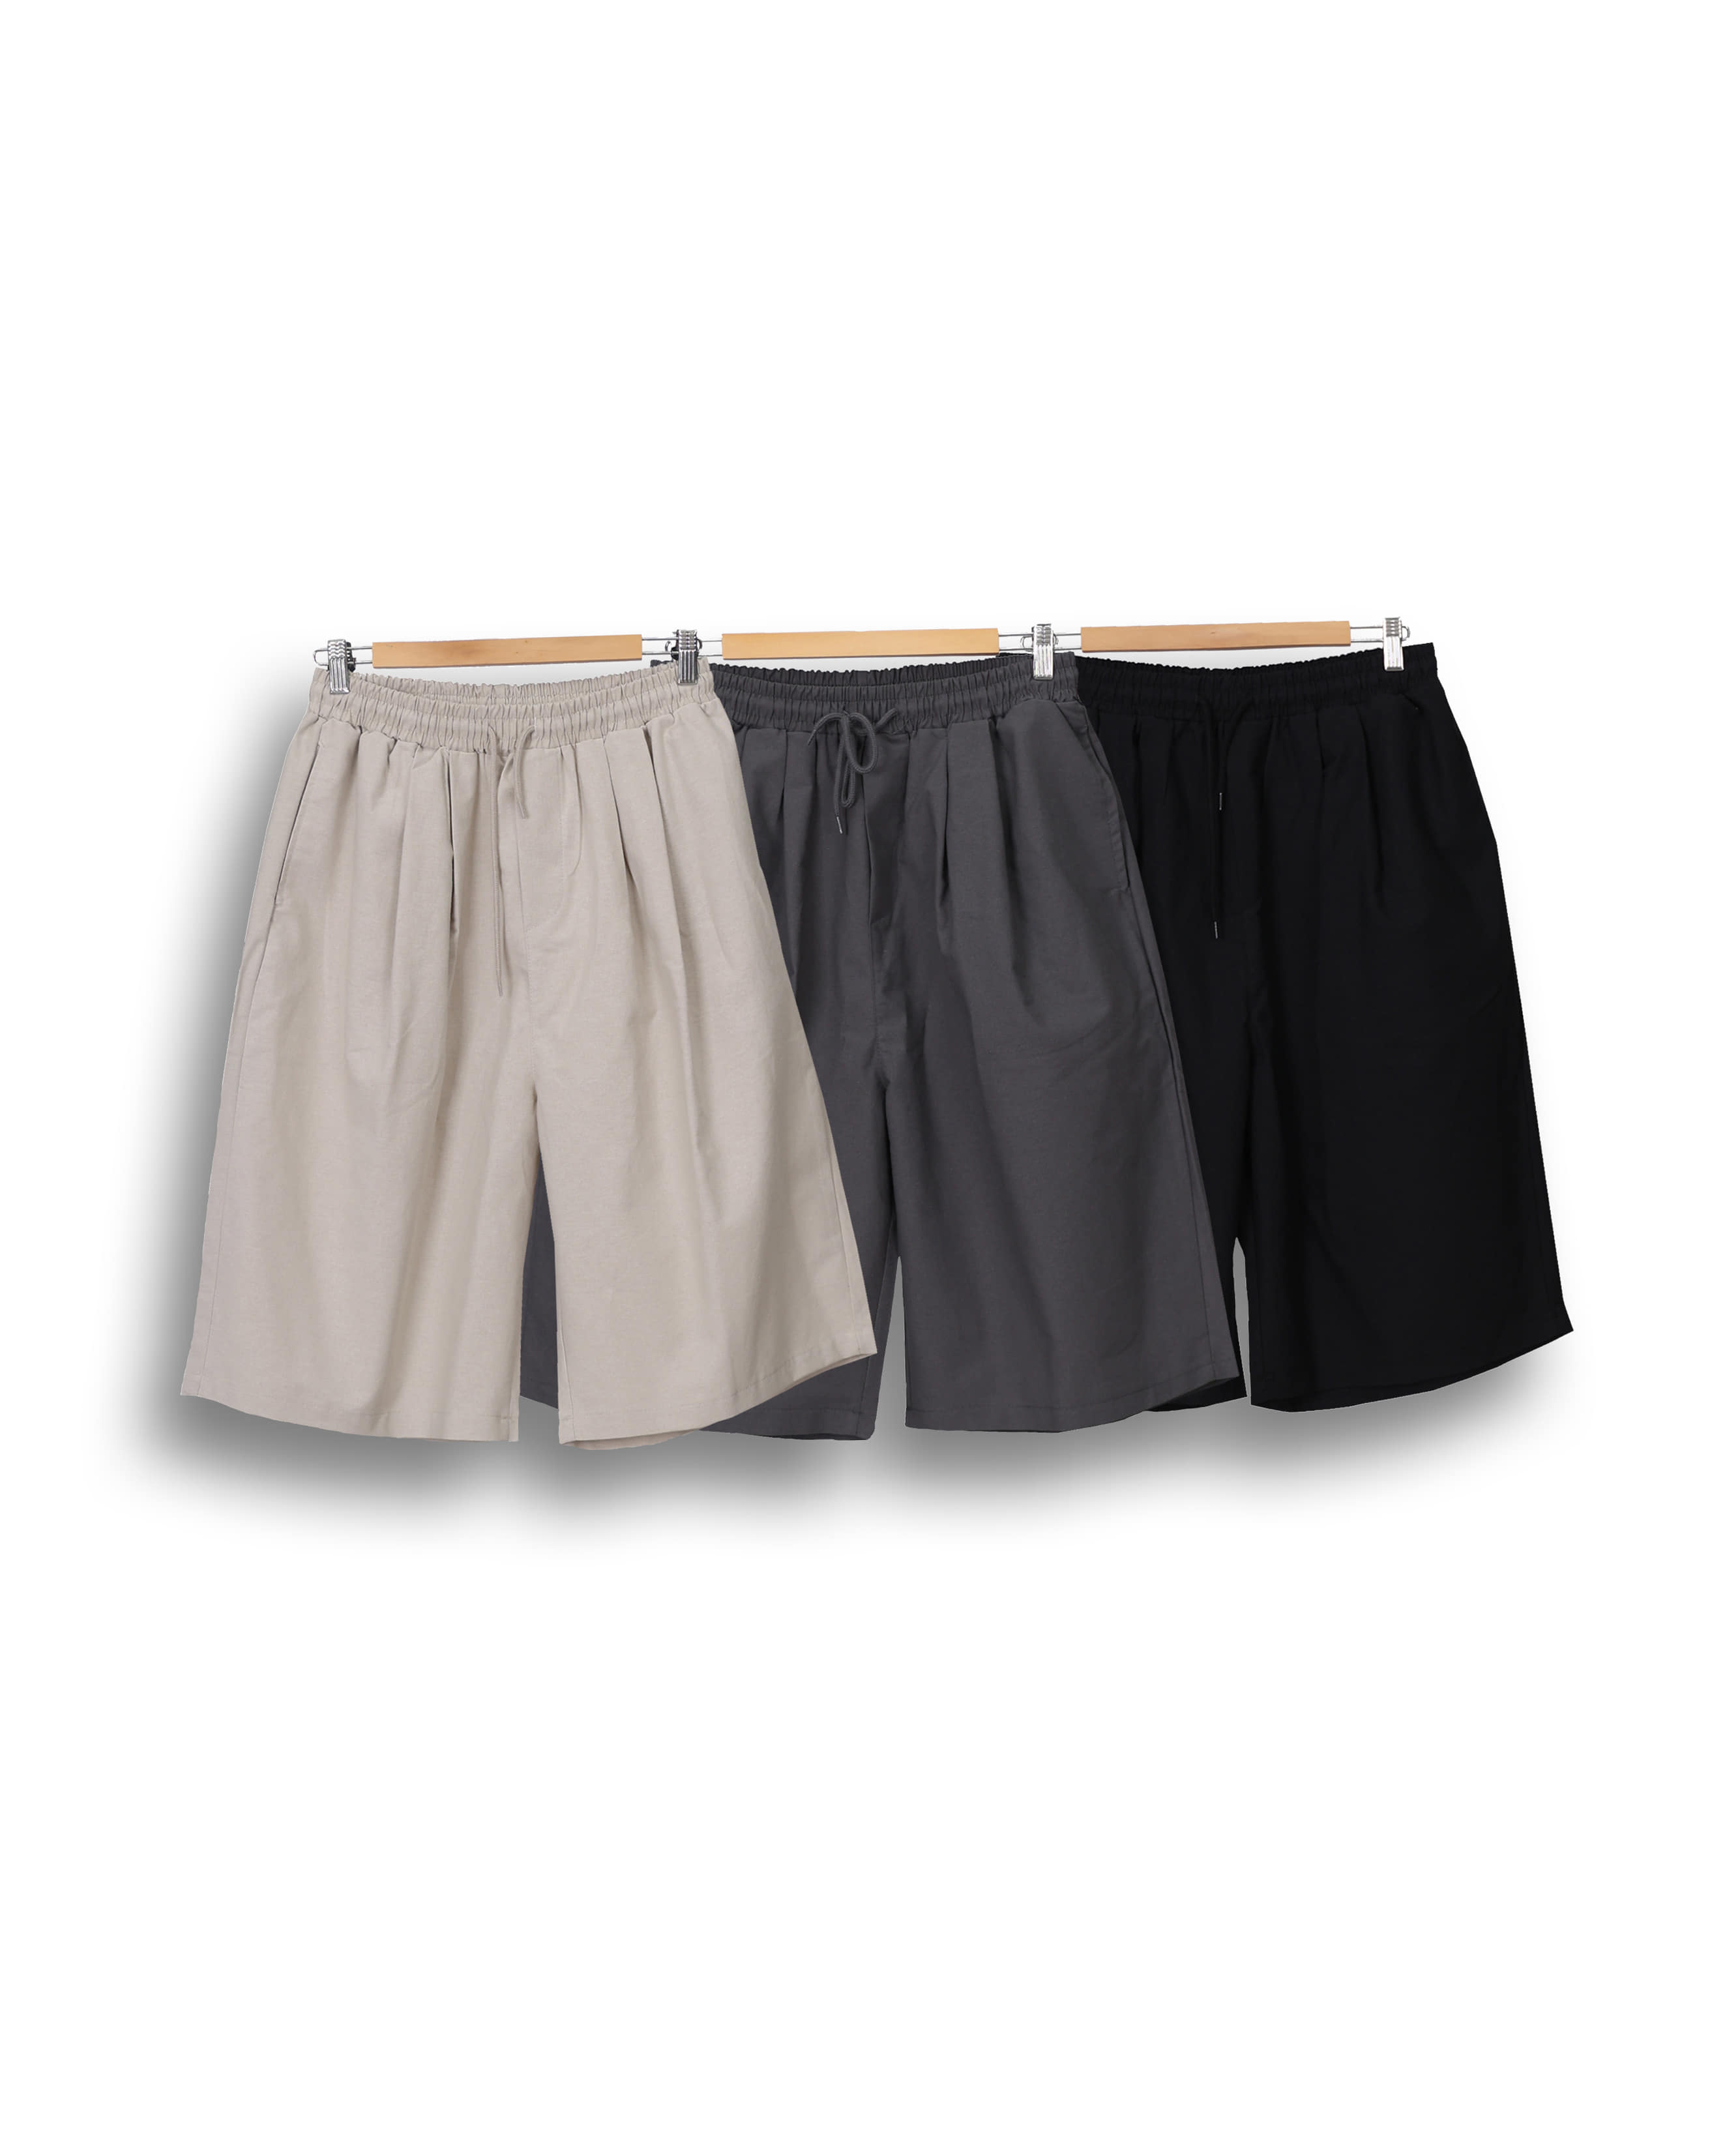 RAON Summer Two Tuck Half Pants (Black/Charcoal/Cream)